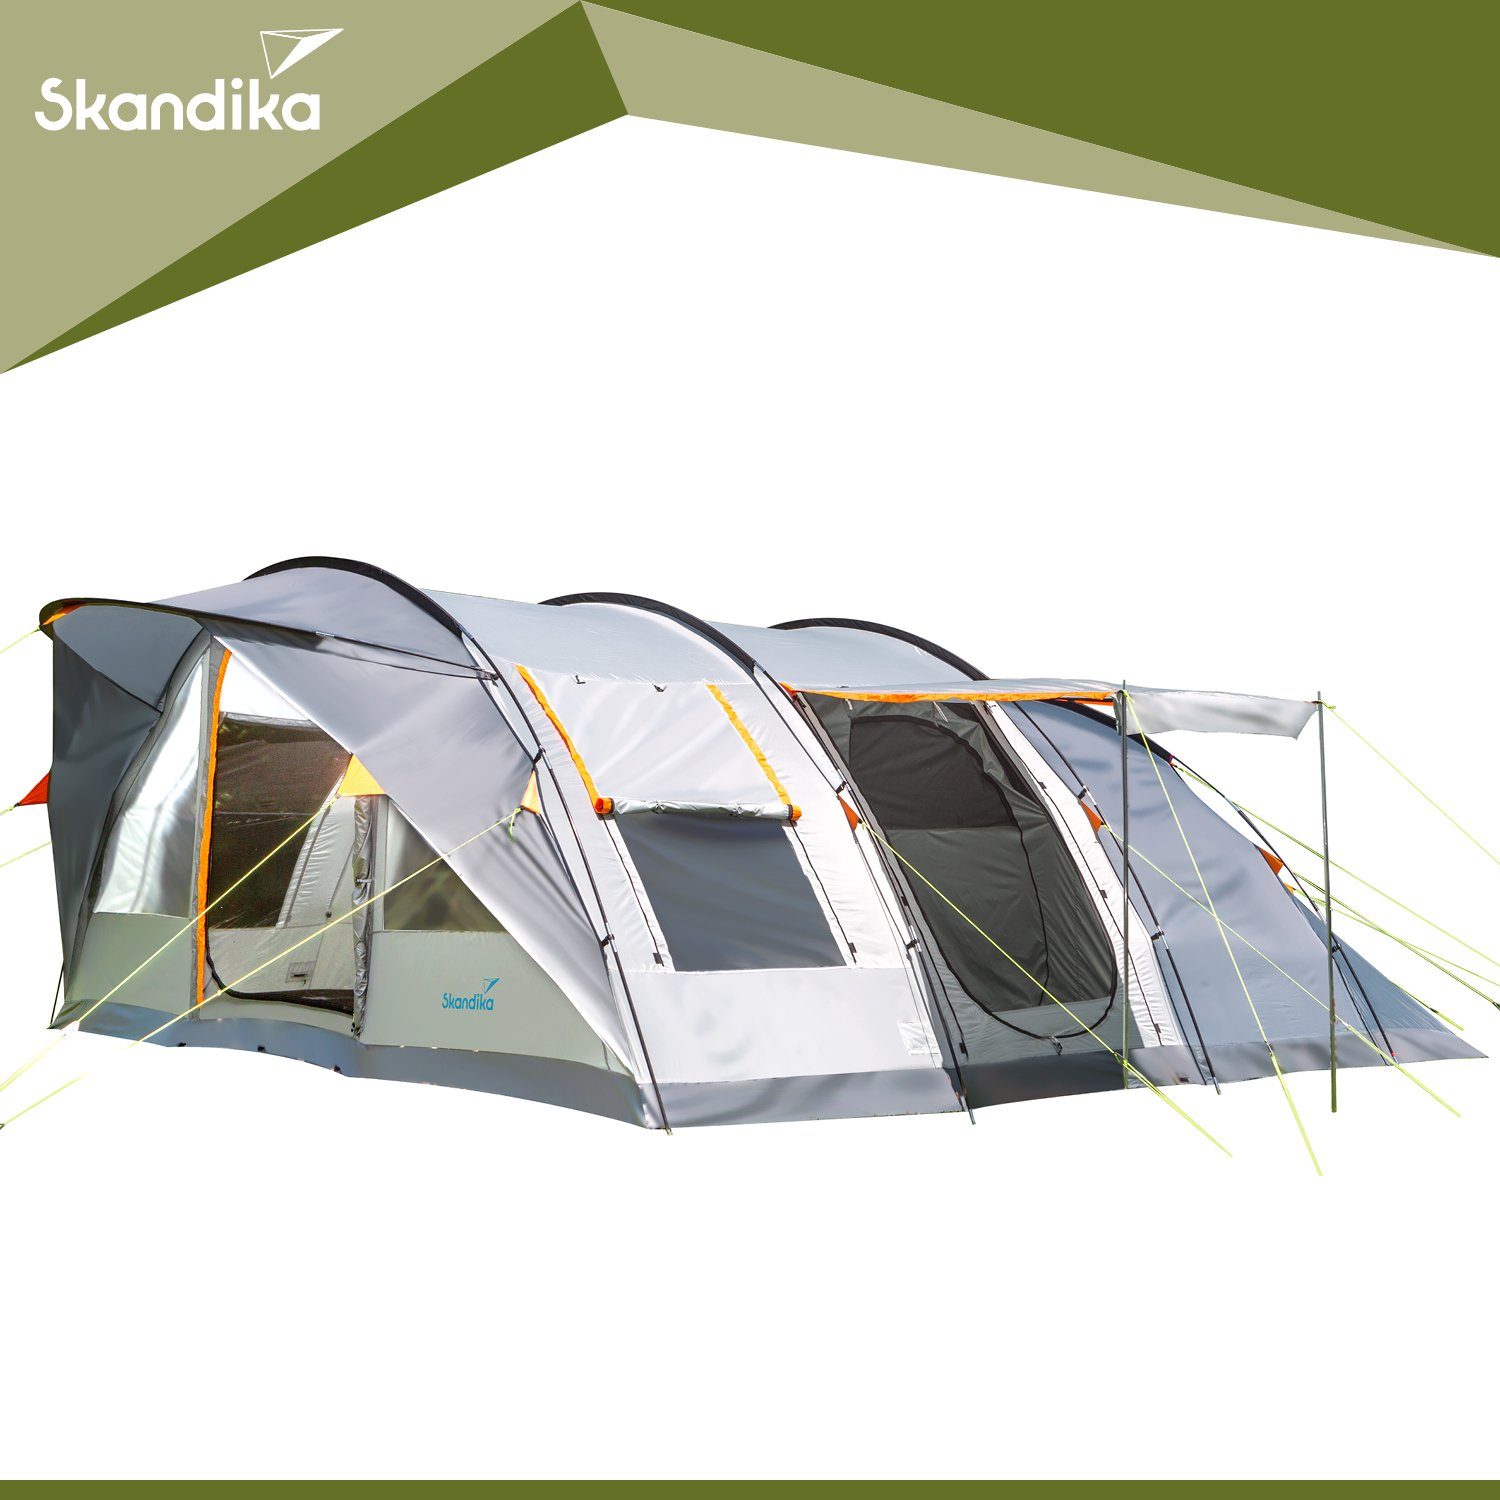 Skandika Tunnelzelt Egersund Campingzelt, 7 Personen, Camping Zelt mit  Sleeper Technologie